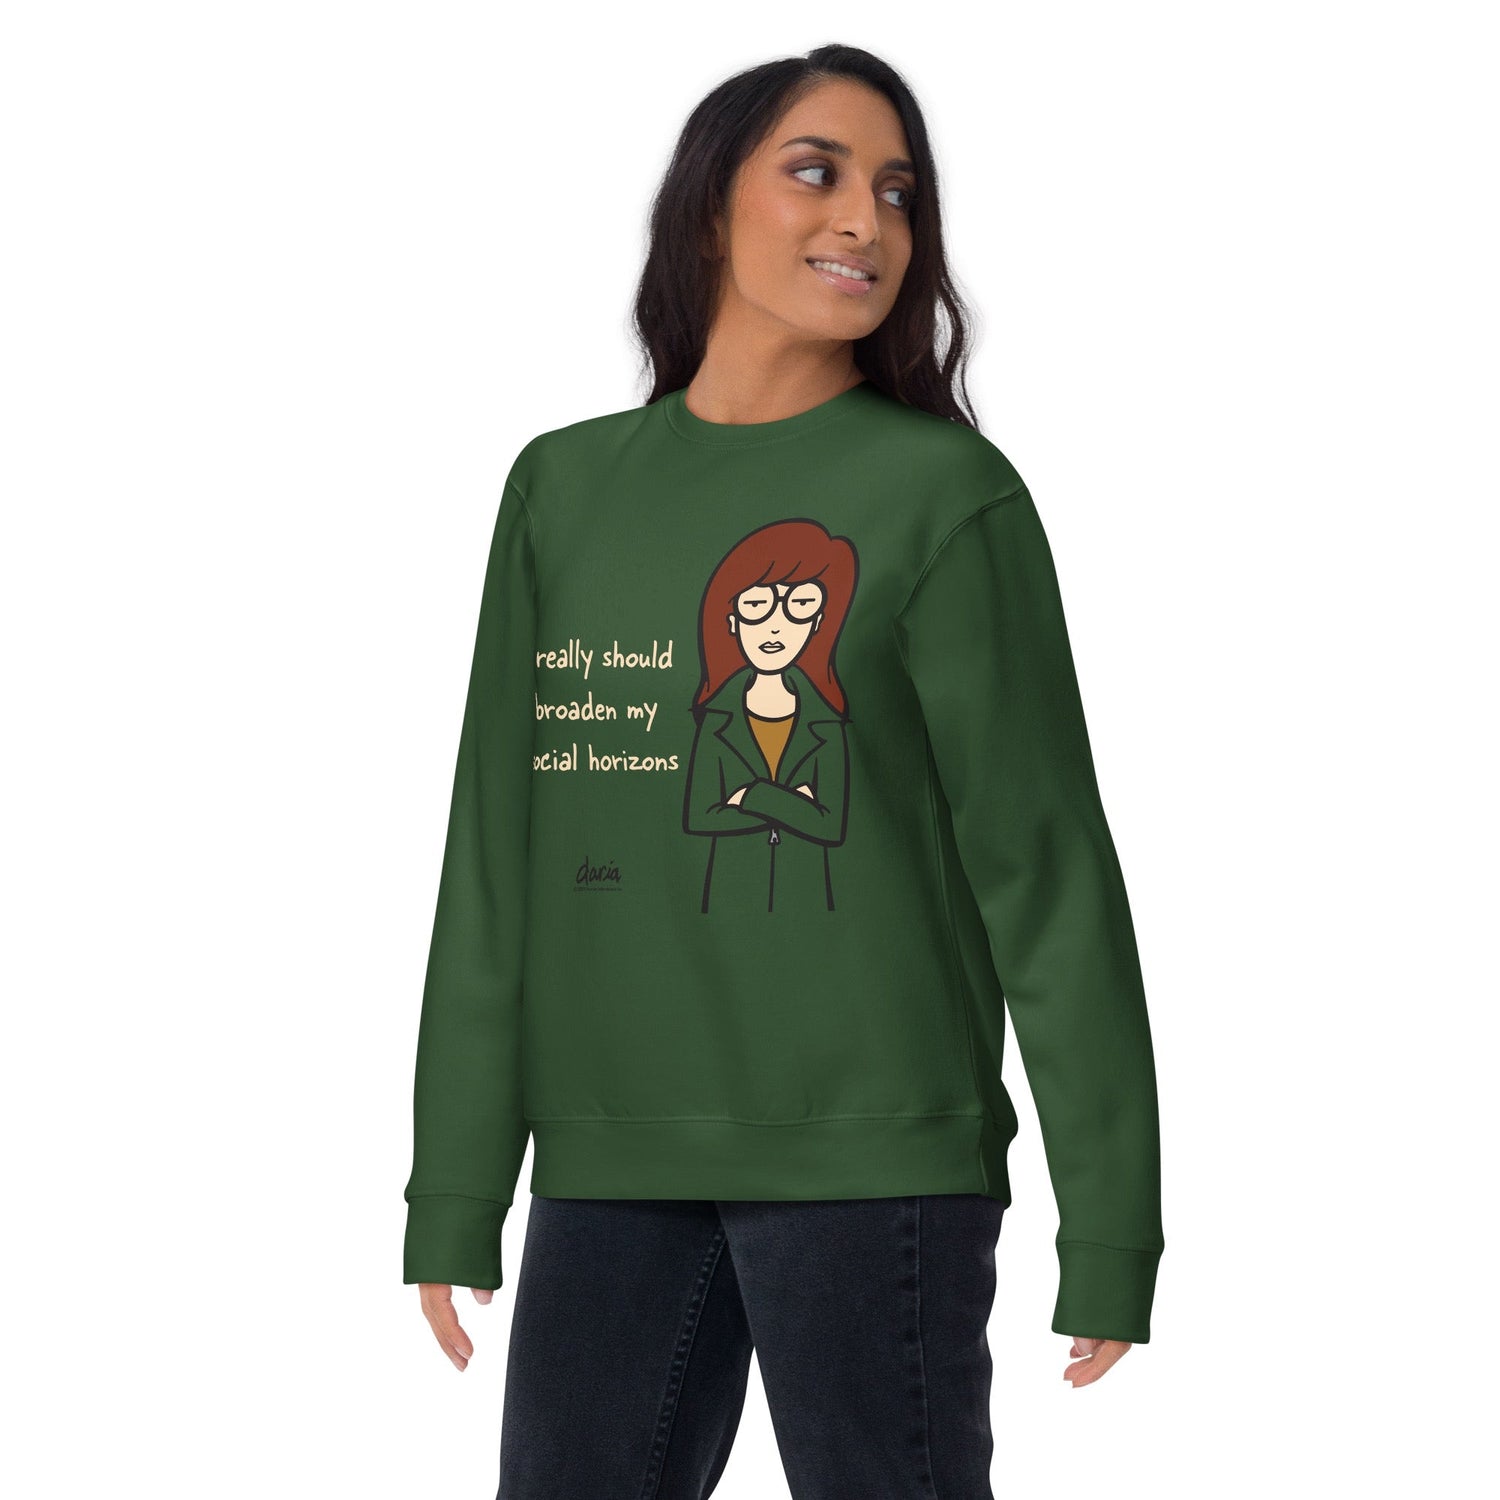 Daria Social Horizons Adult Sweatshirt - Paramount Shop